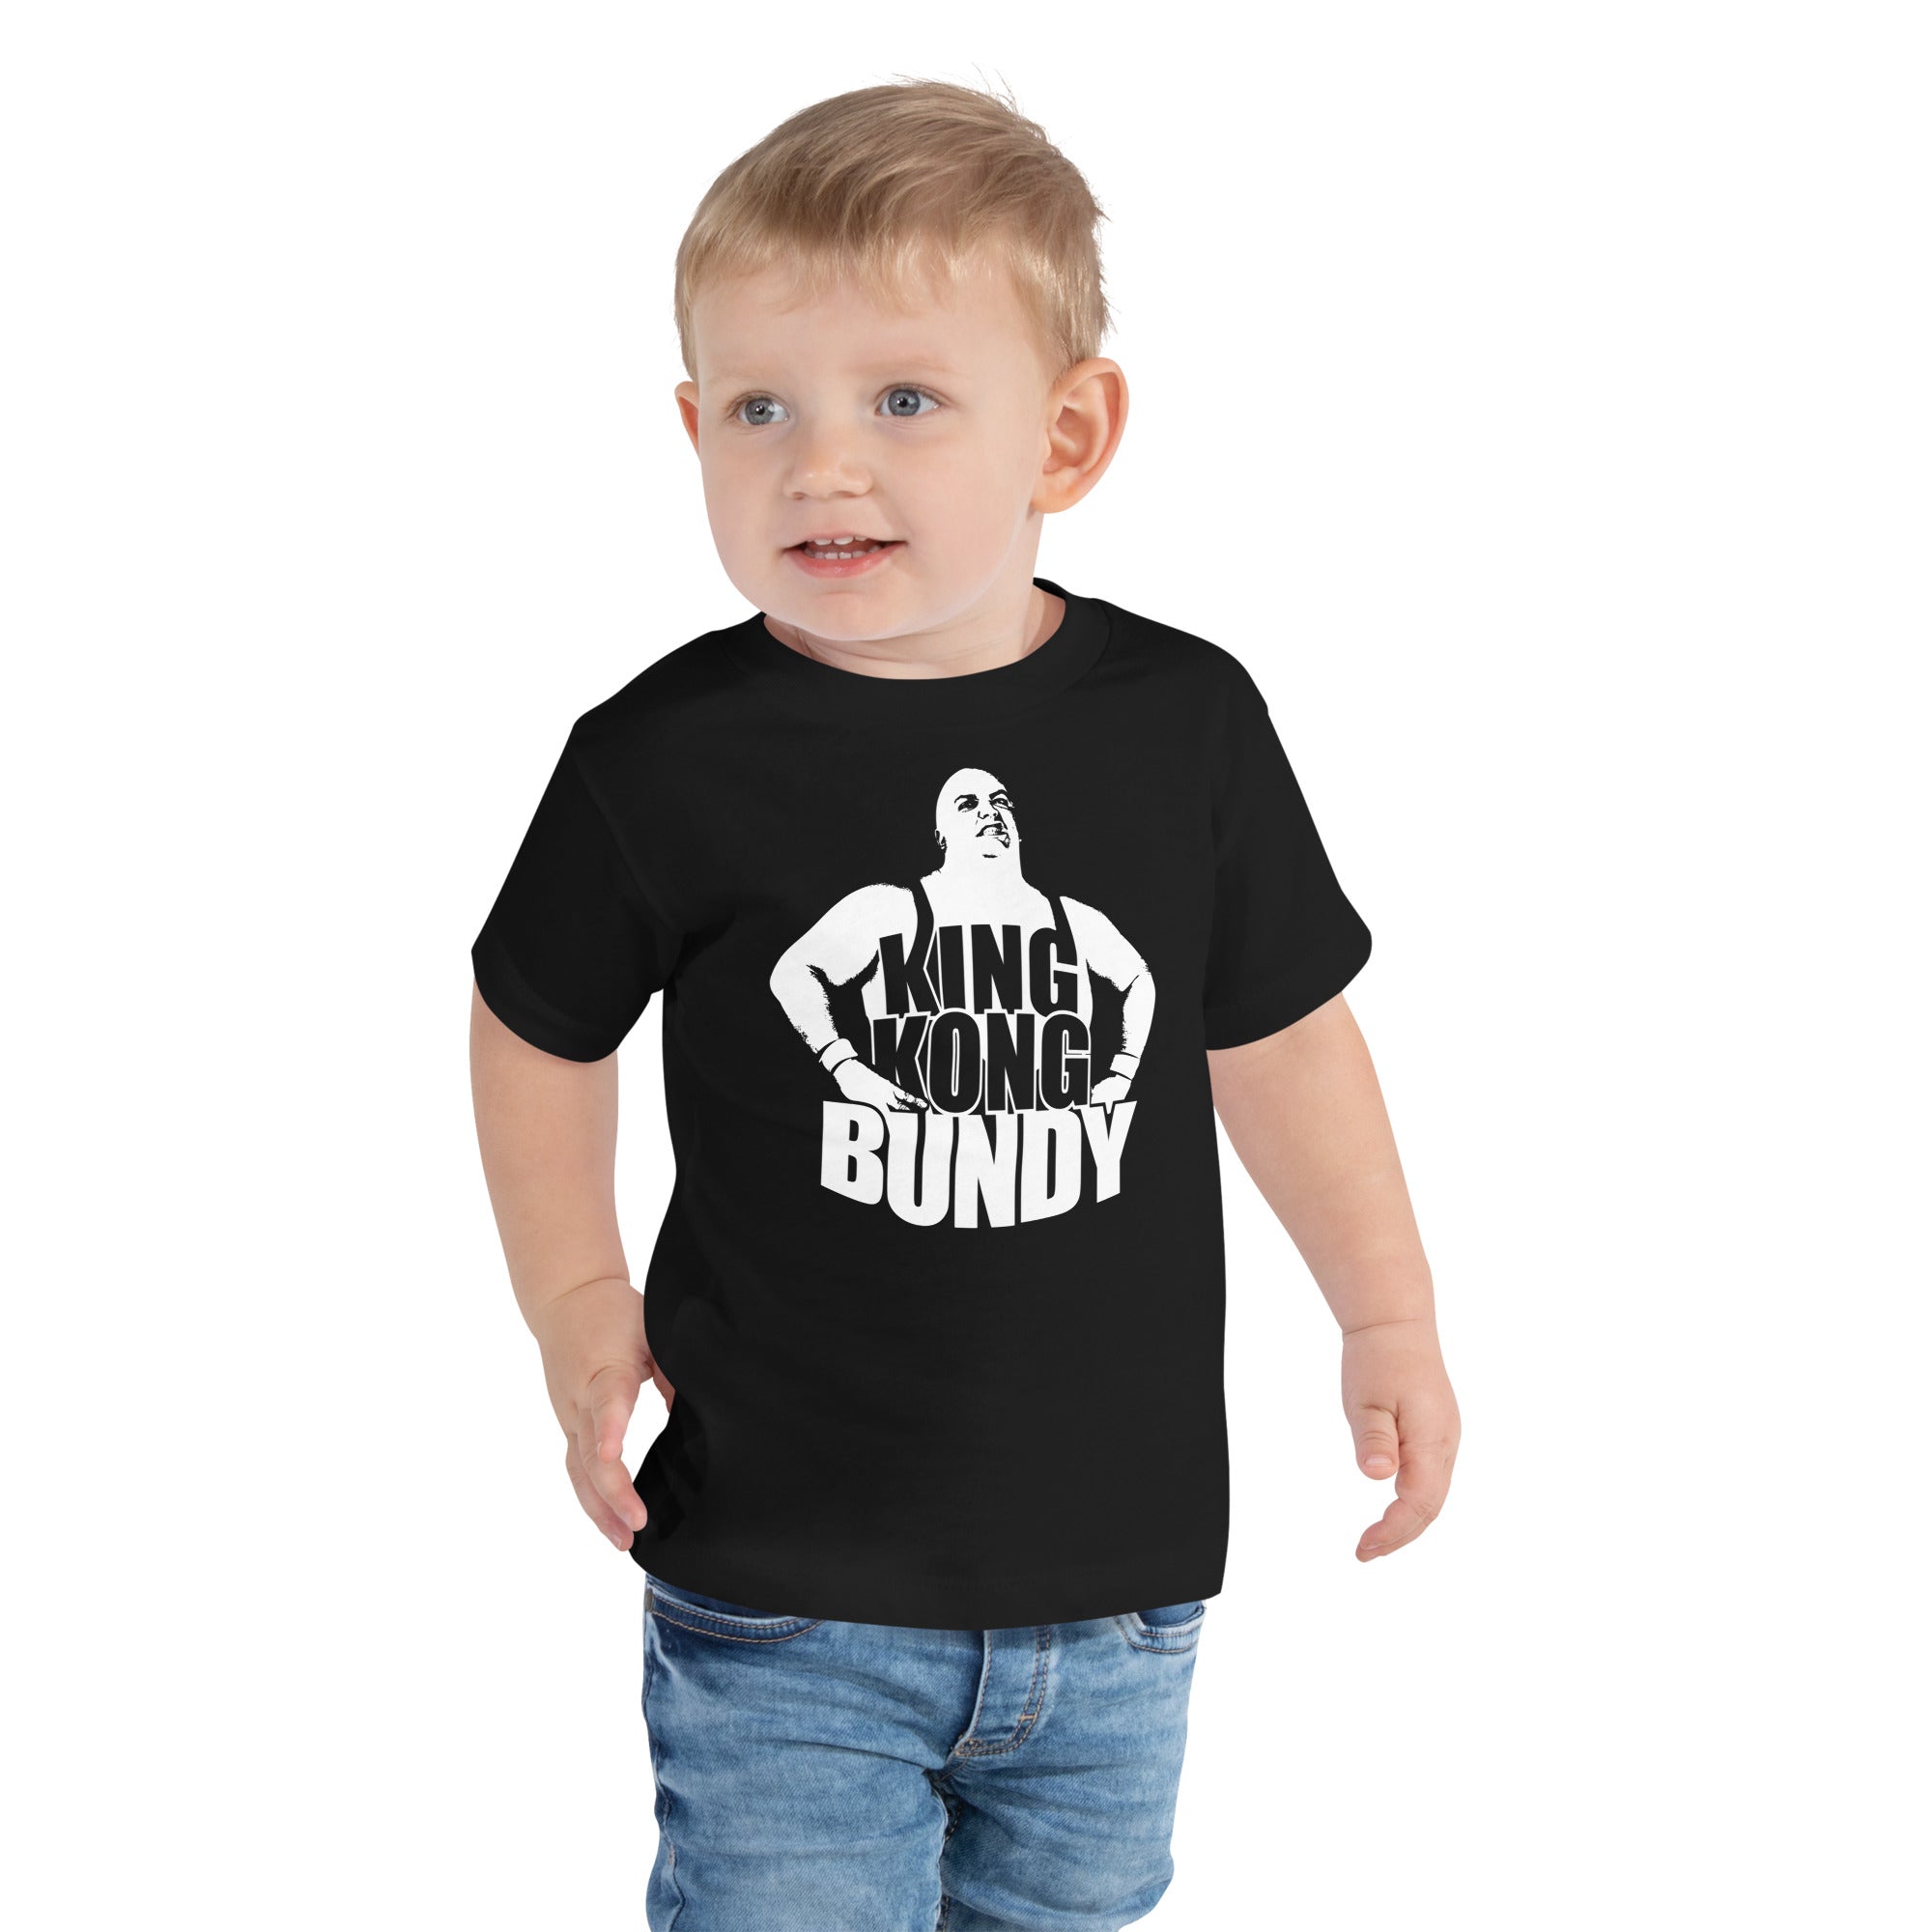 King Kong Bundy - Classic Toddler Tee